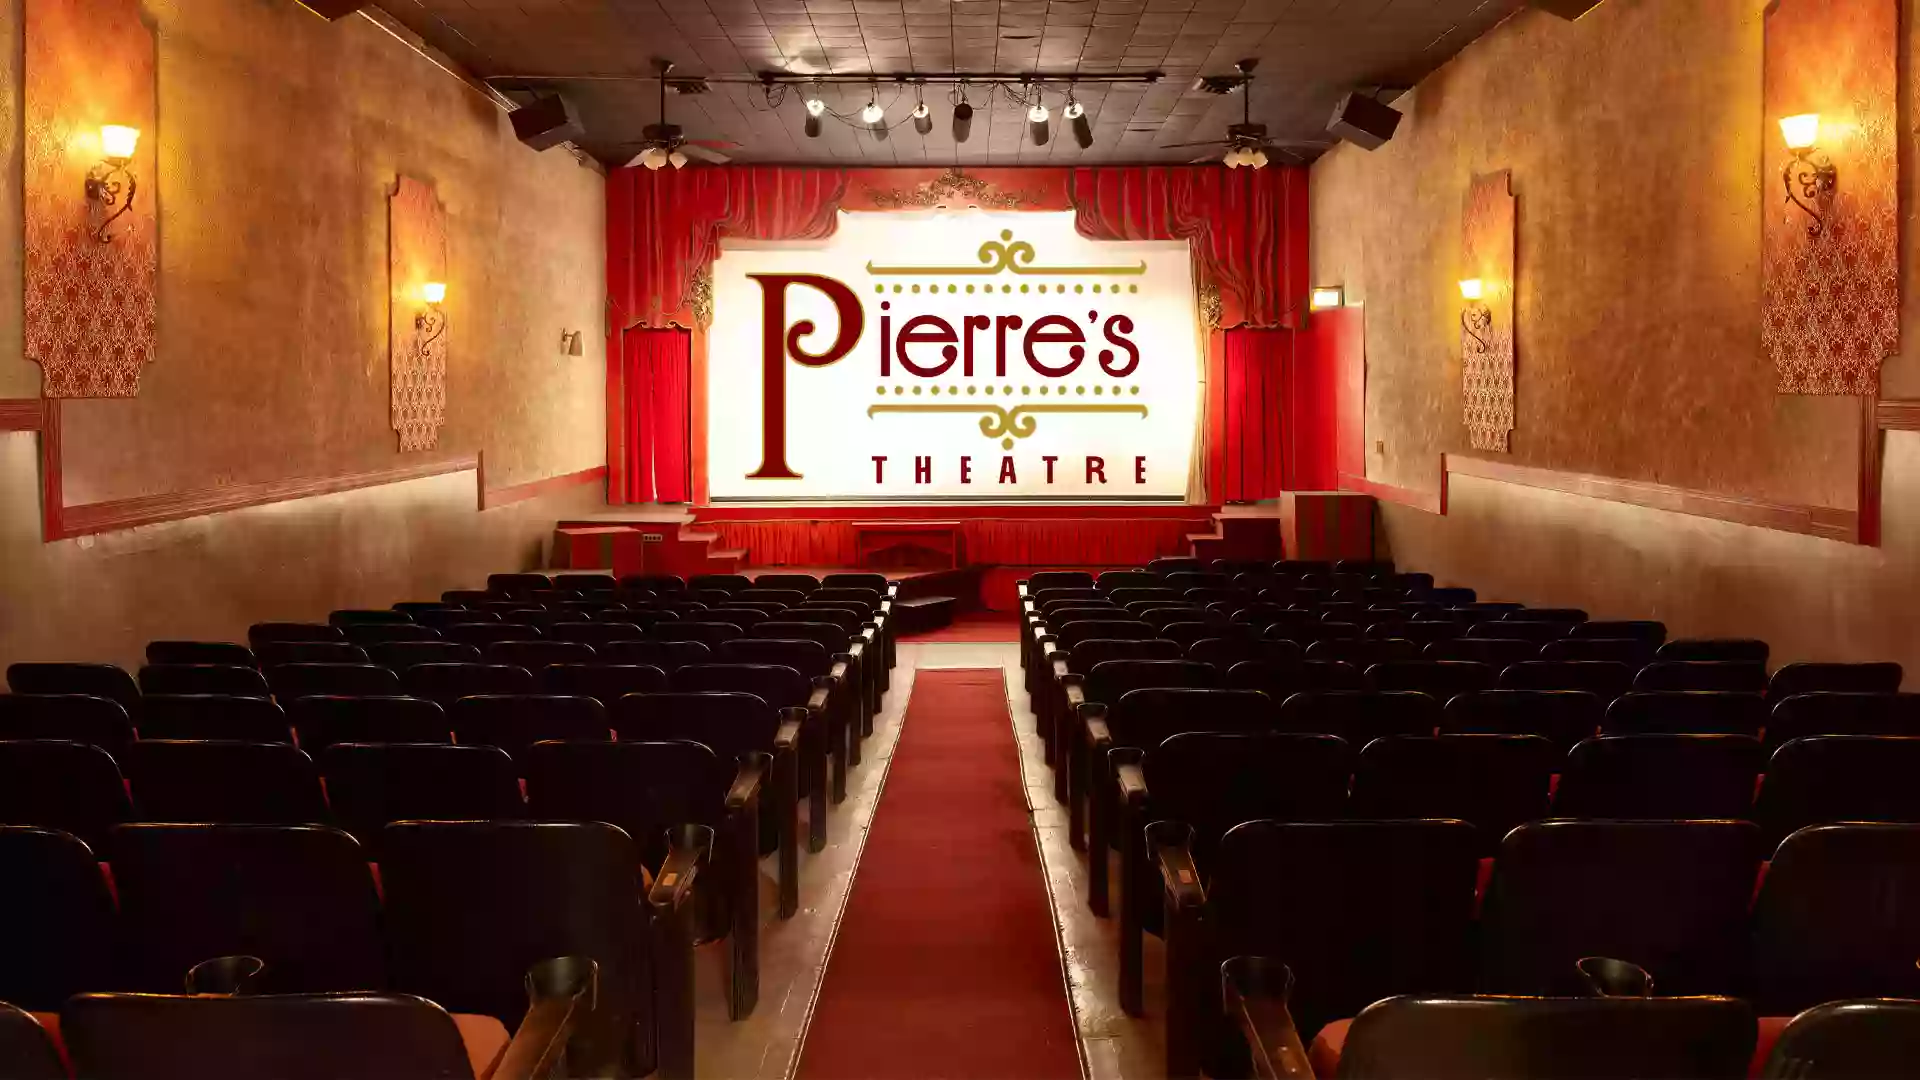 Pierre's Theatre